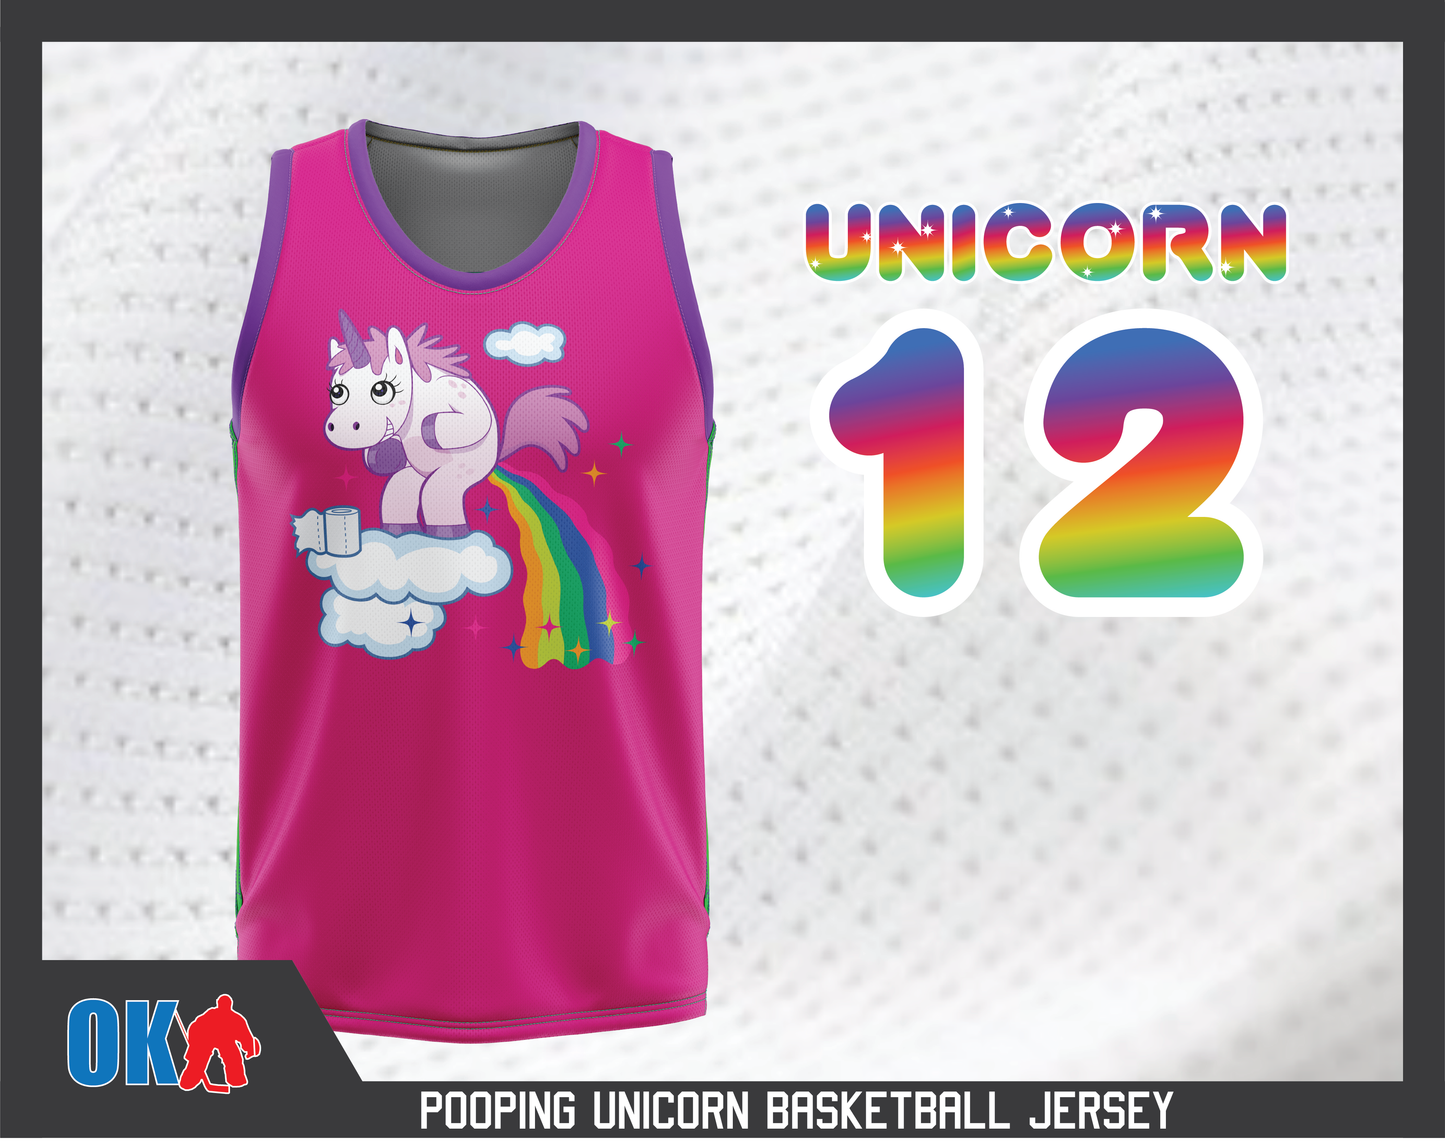 Pooping Unicorn Basketball Jersey